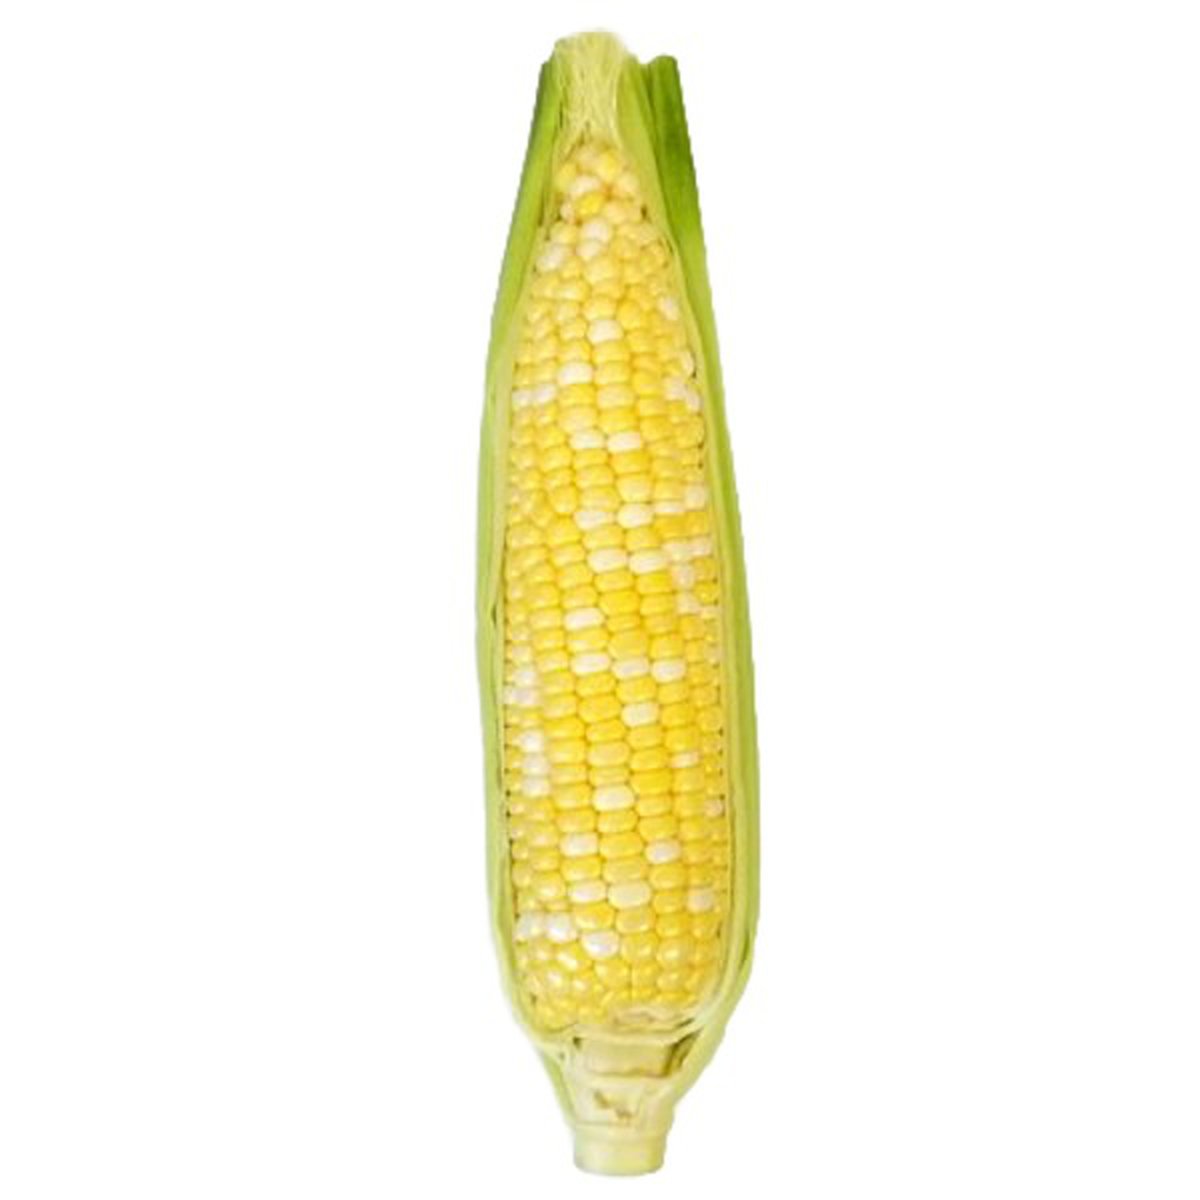 yellow dent corn